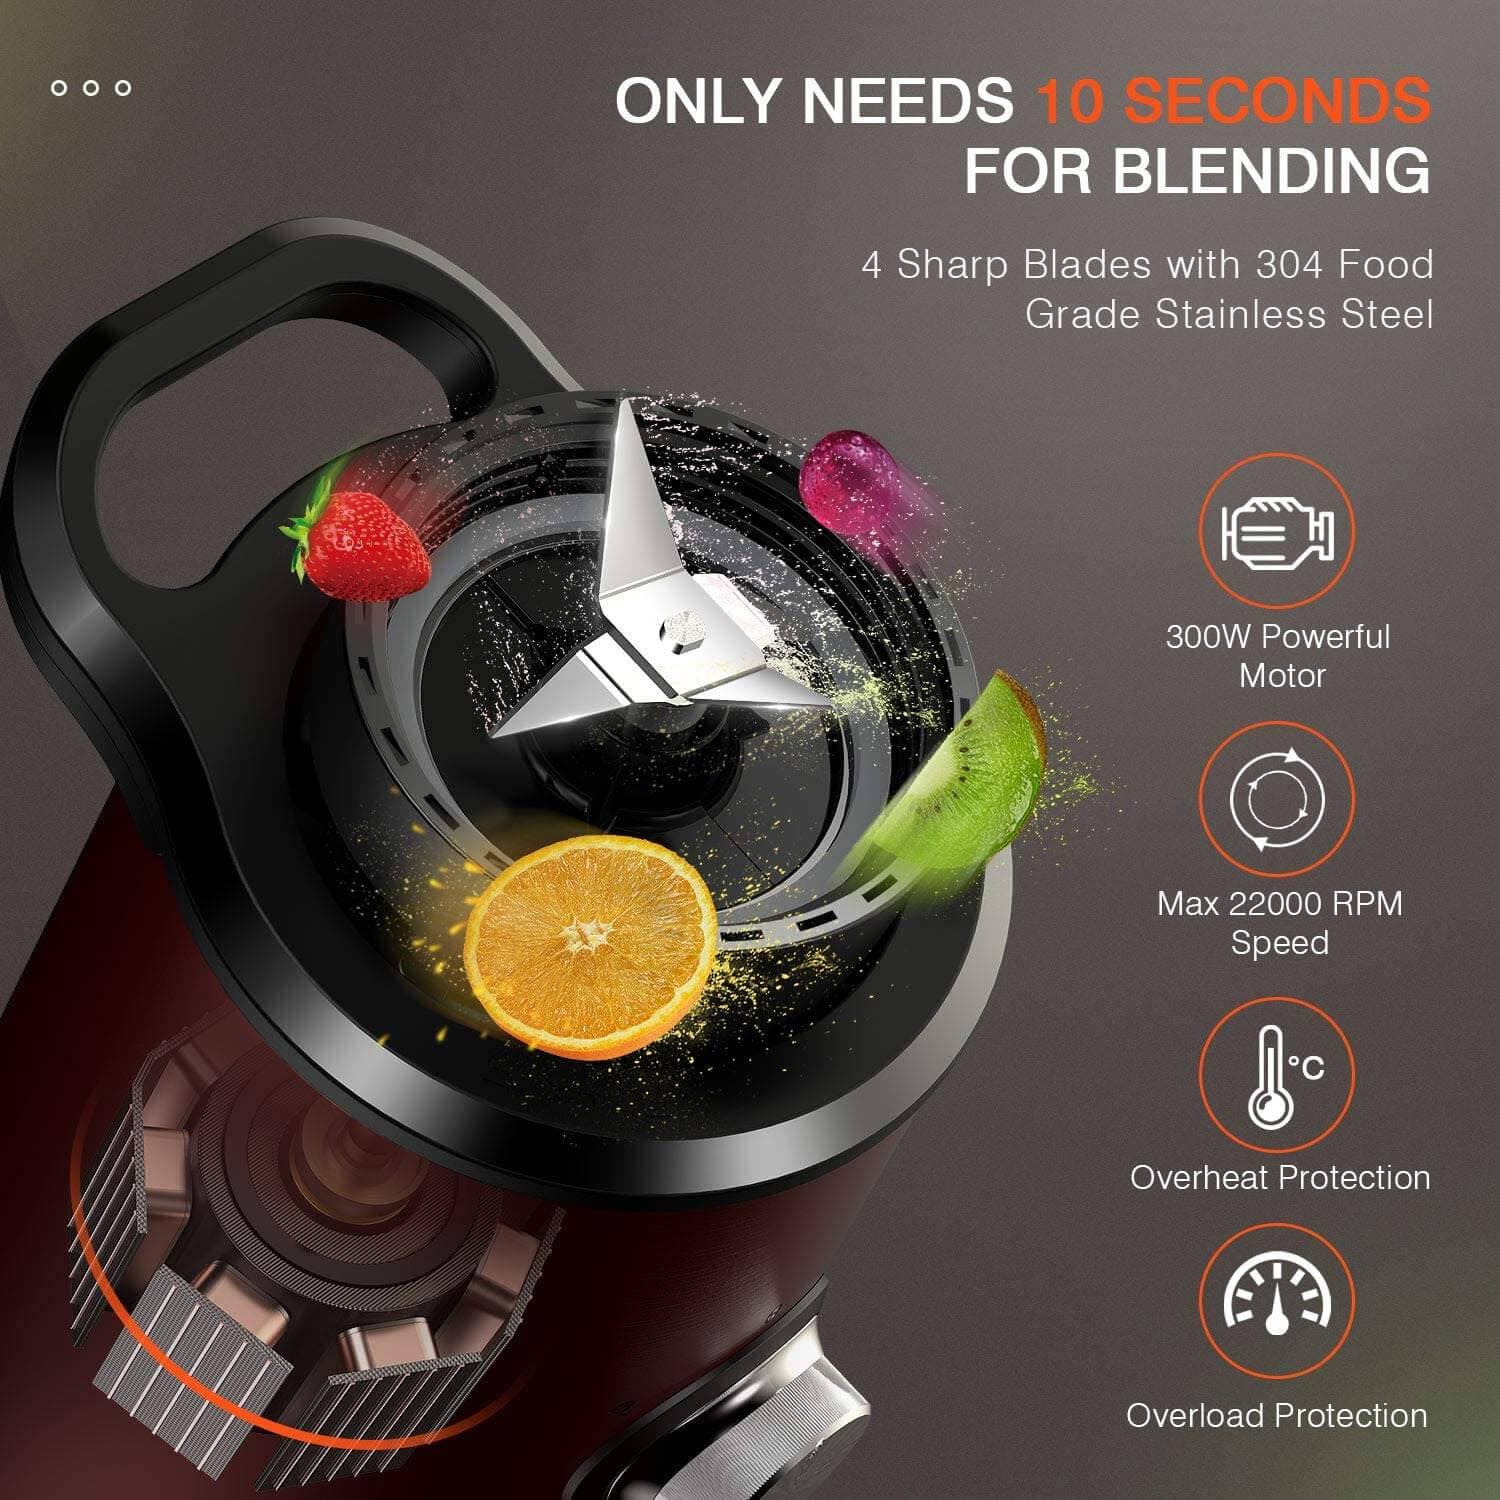 The Best portable electric fruit mixer juicer-Wholesale – HadinEEon